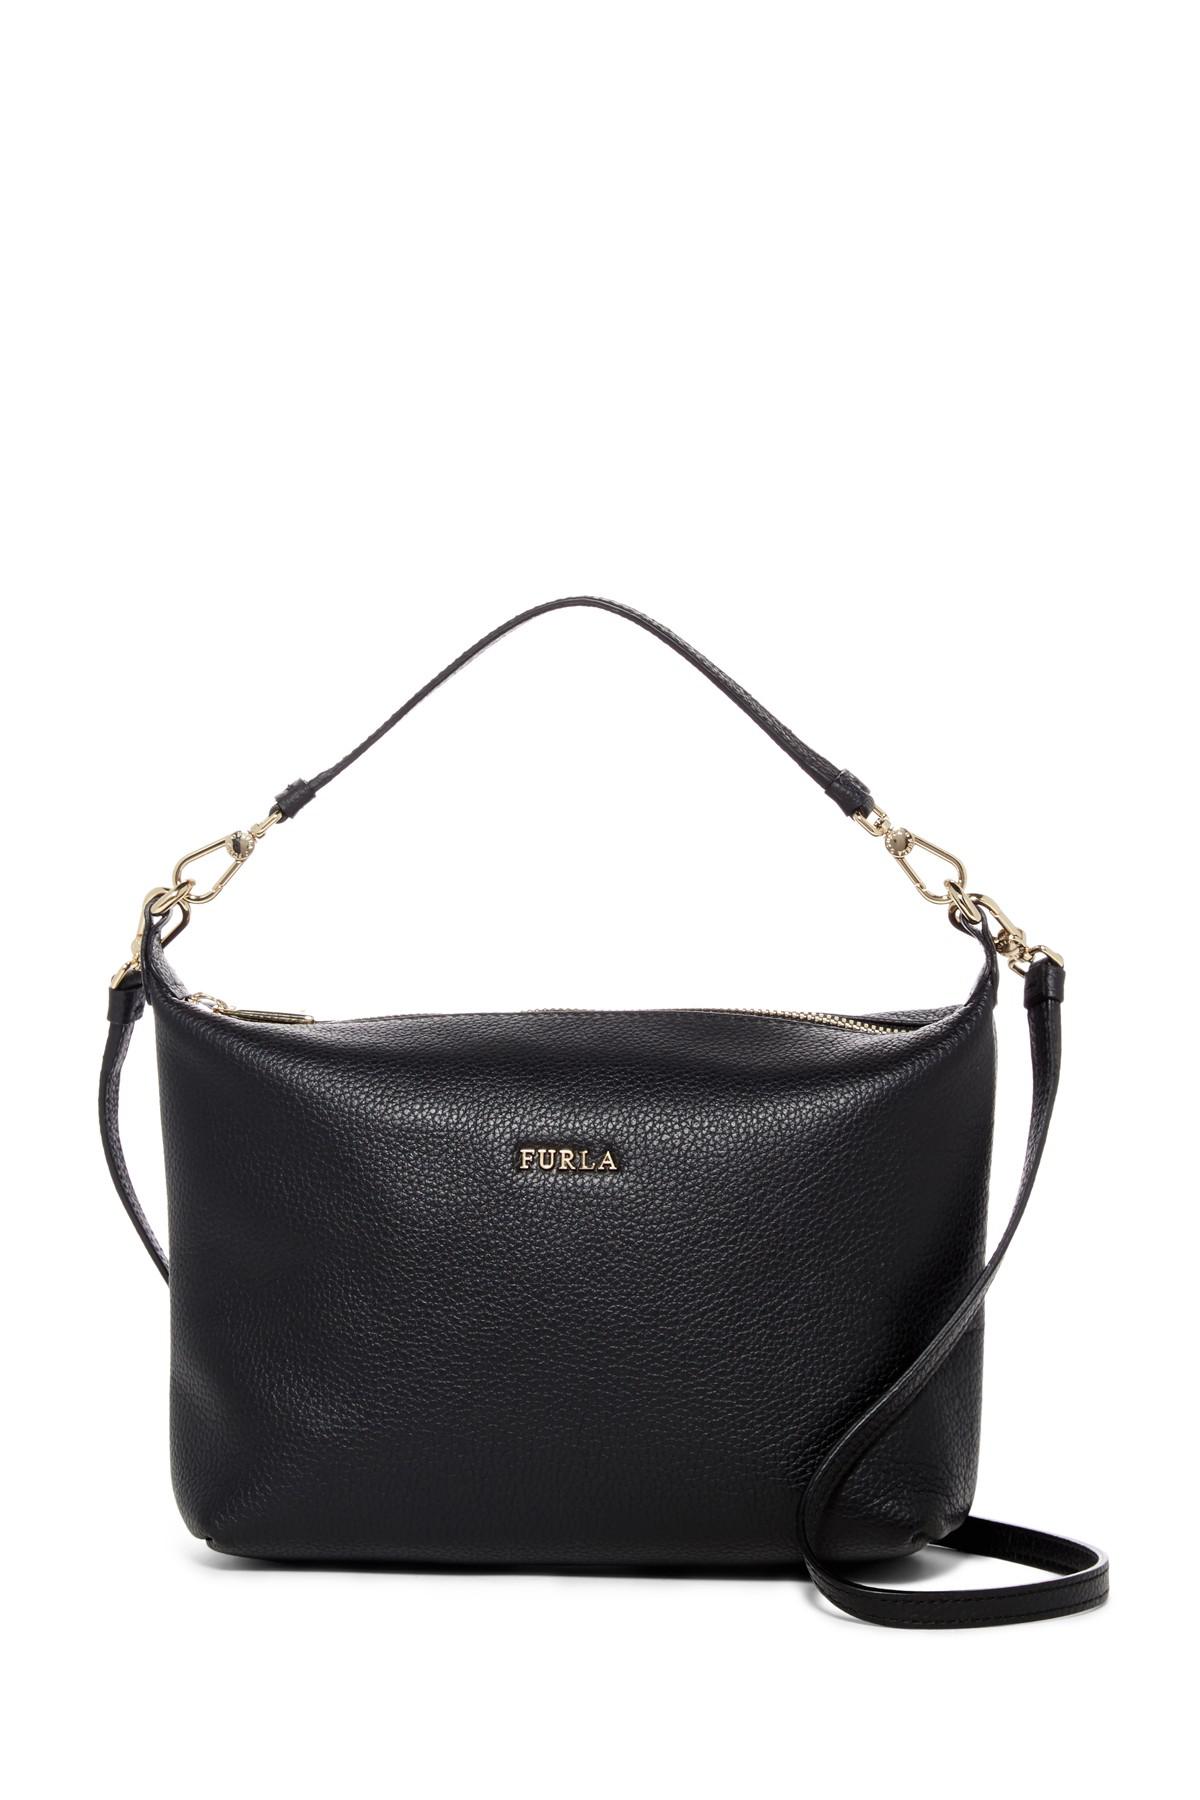 Furla Sophie Leather Crossbody Bag in Onyx (Black) - Lyst